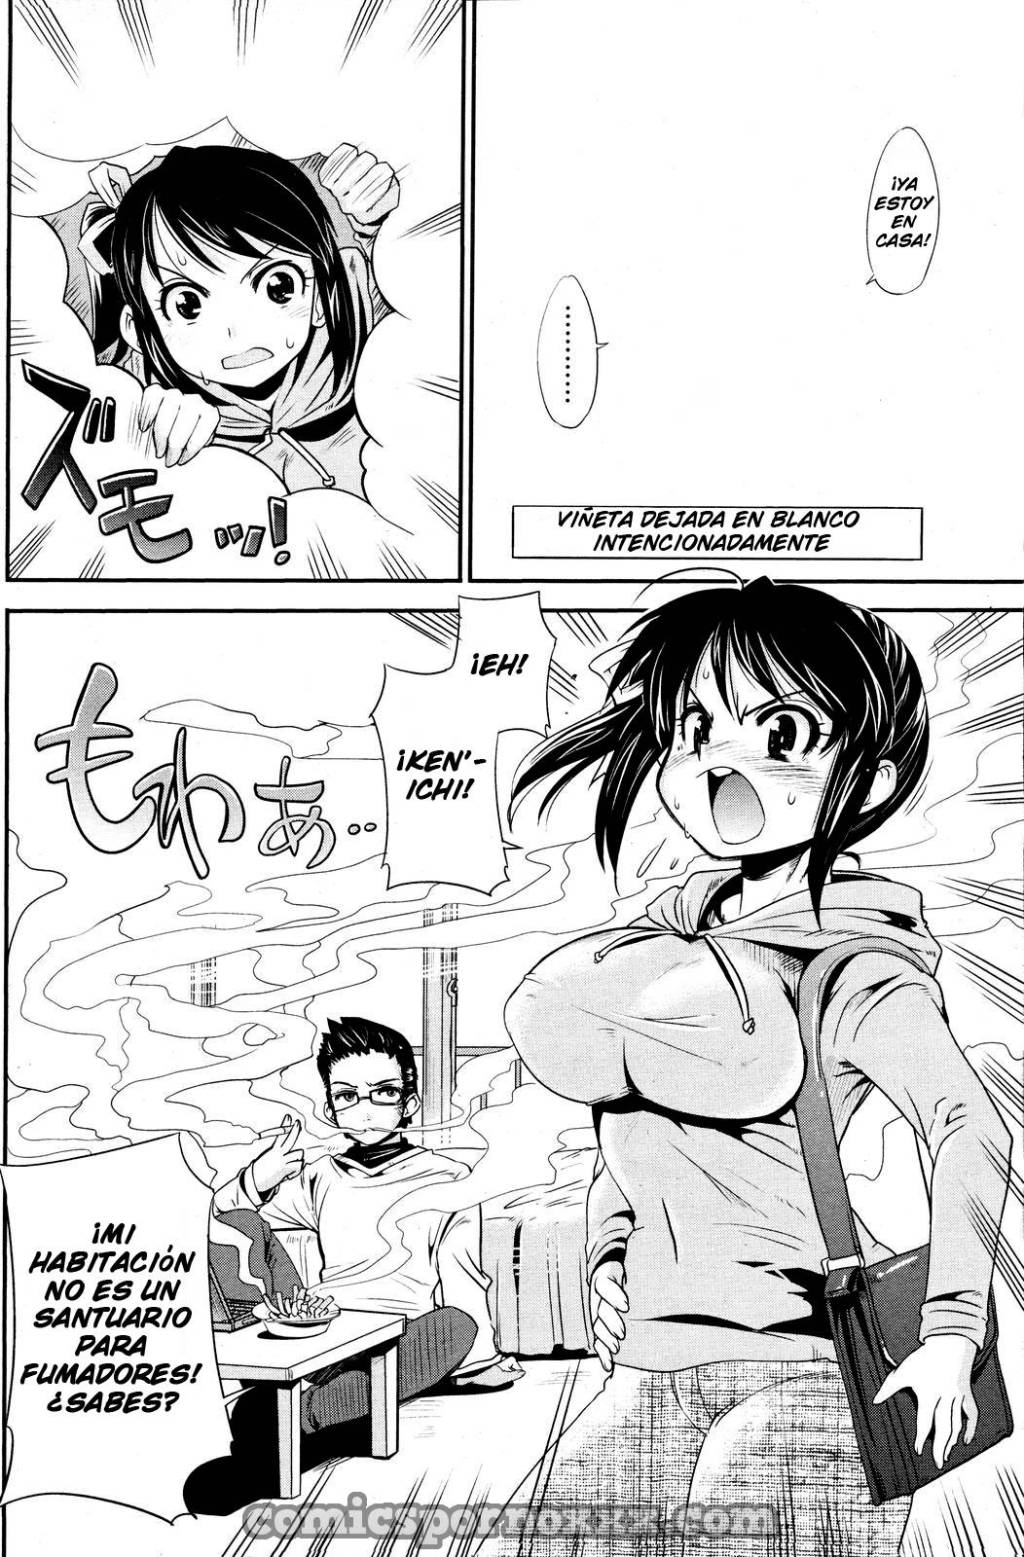 Smog Alert (Prohibido Fumar) - 2 - Comics Porno - Hentai Manga - Cartoon XXX